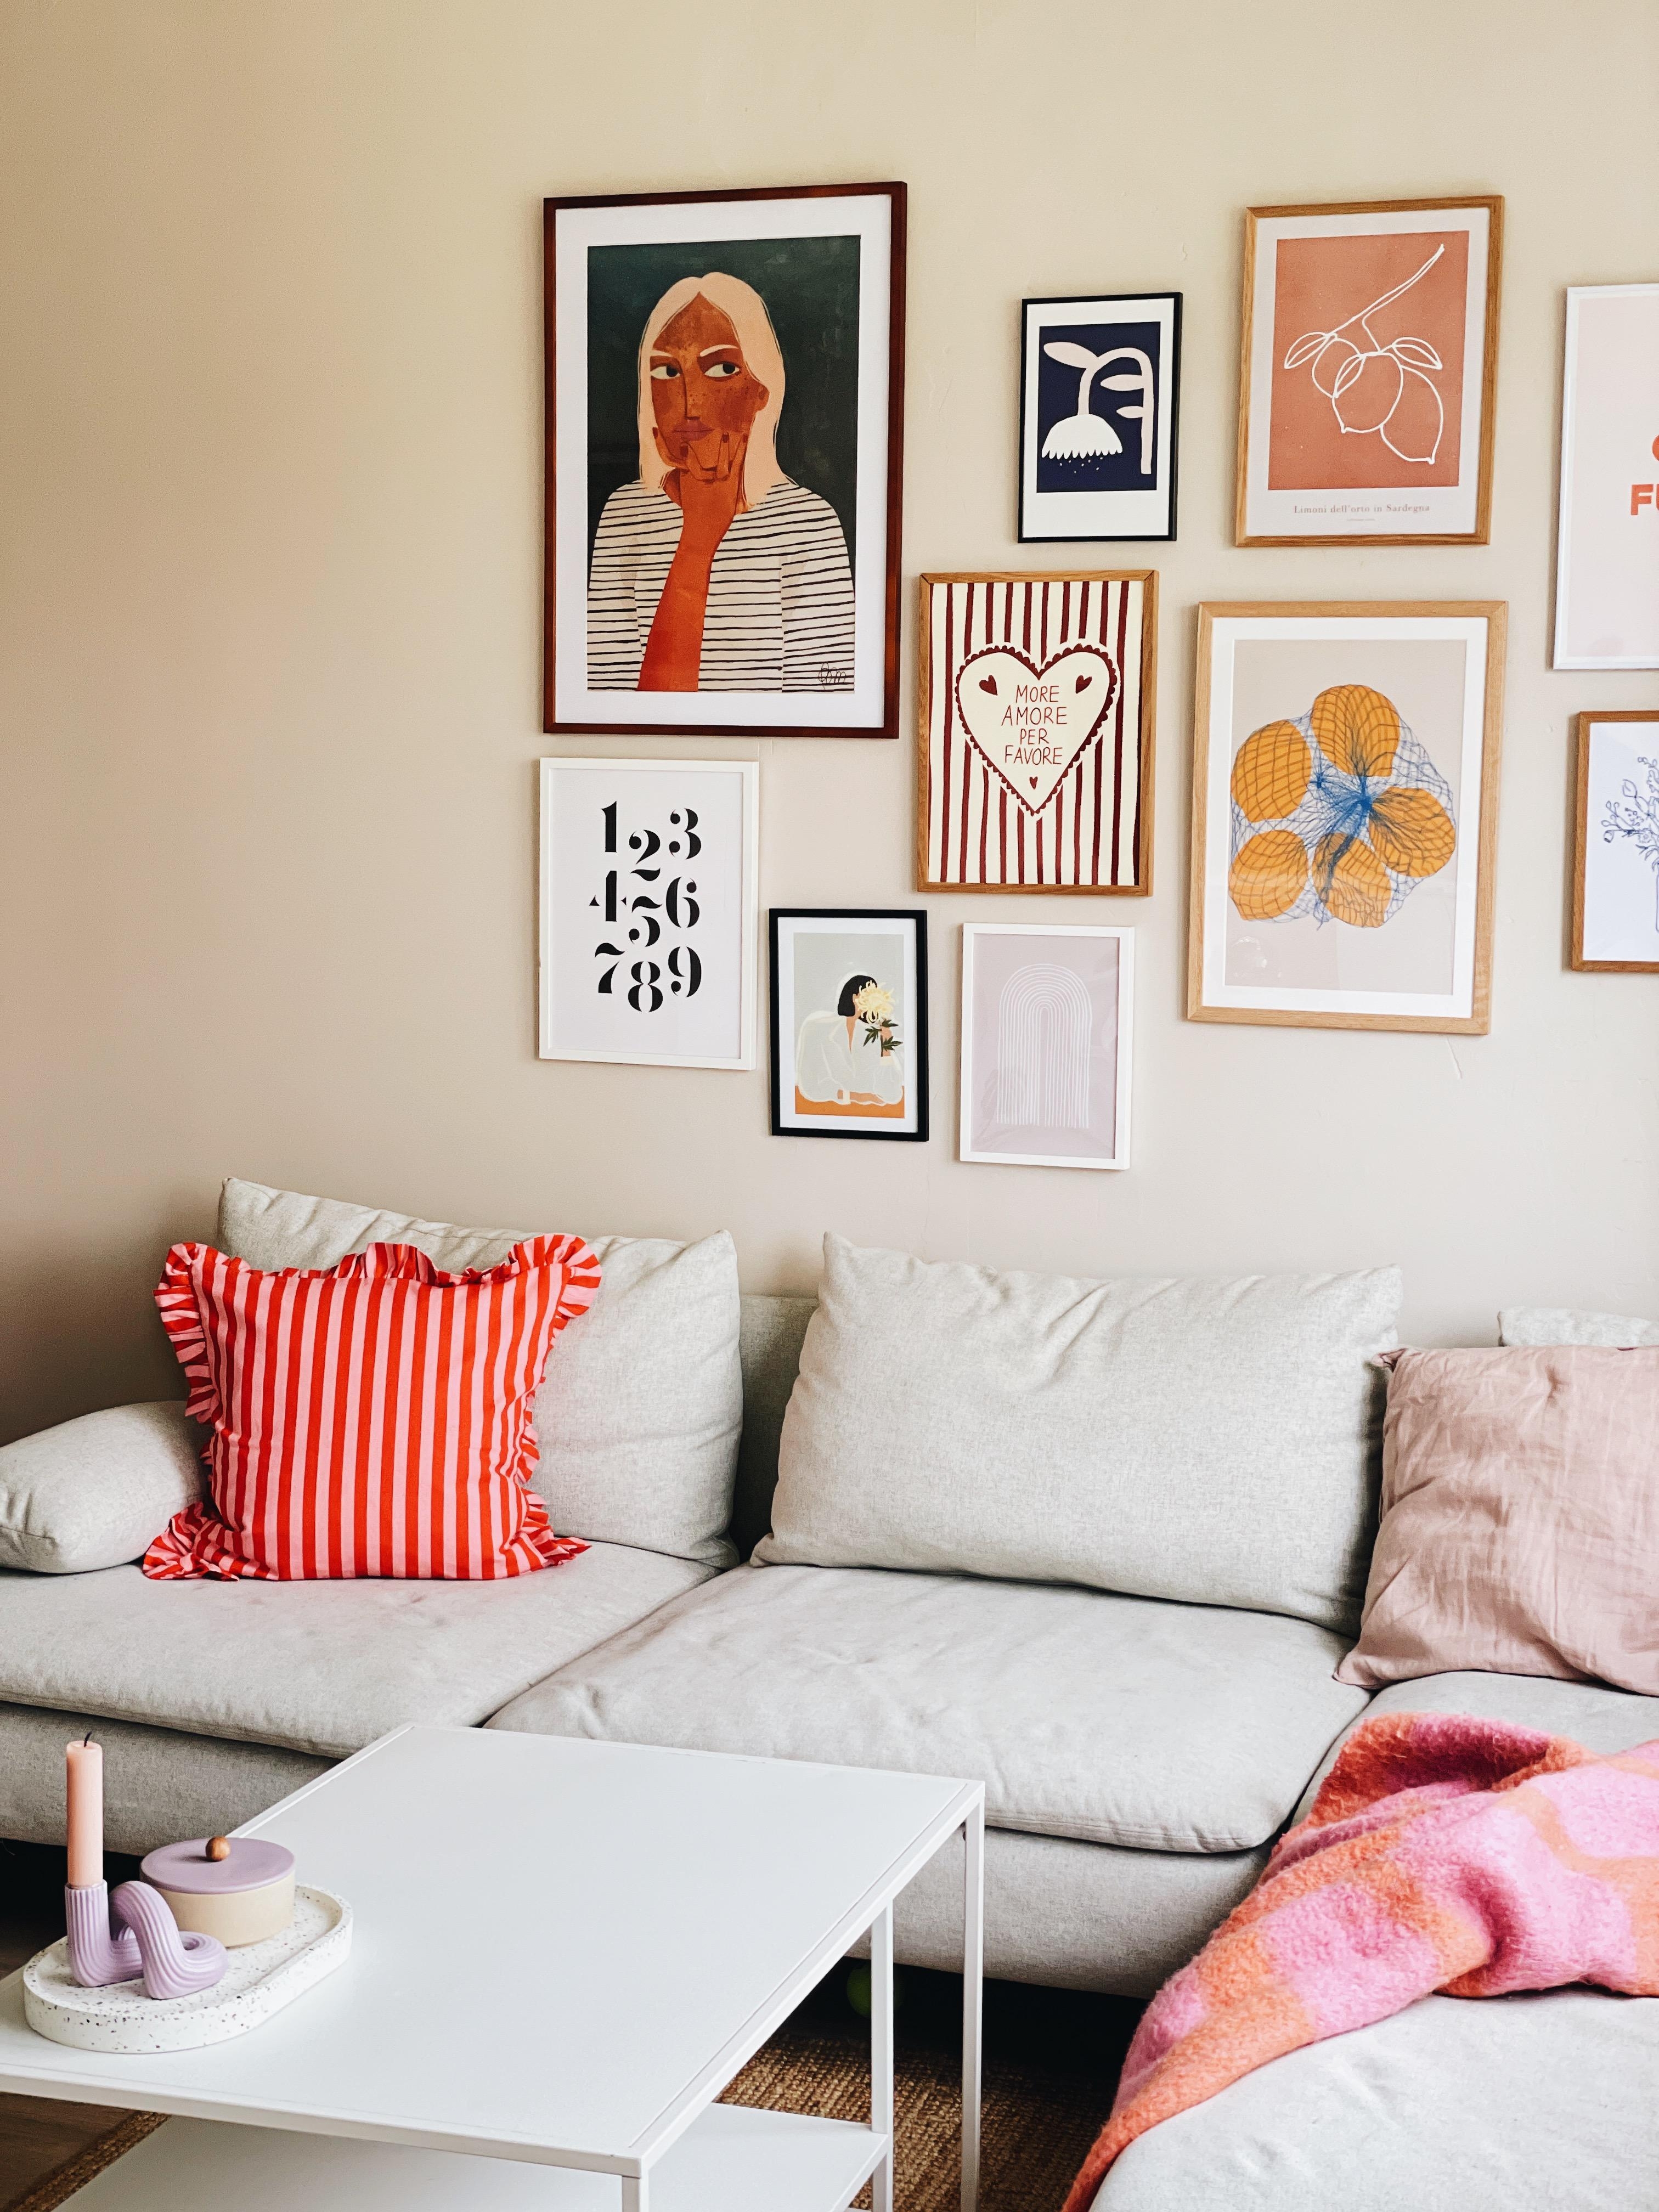 Lieblingsfarbkombi ❤️
#wohnzimmer #livingroom #couchliebt #lieblingsraum #gallerywall #cozy #farbenfroh #colours 